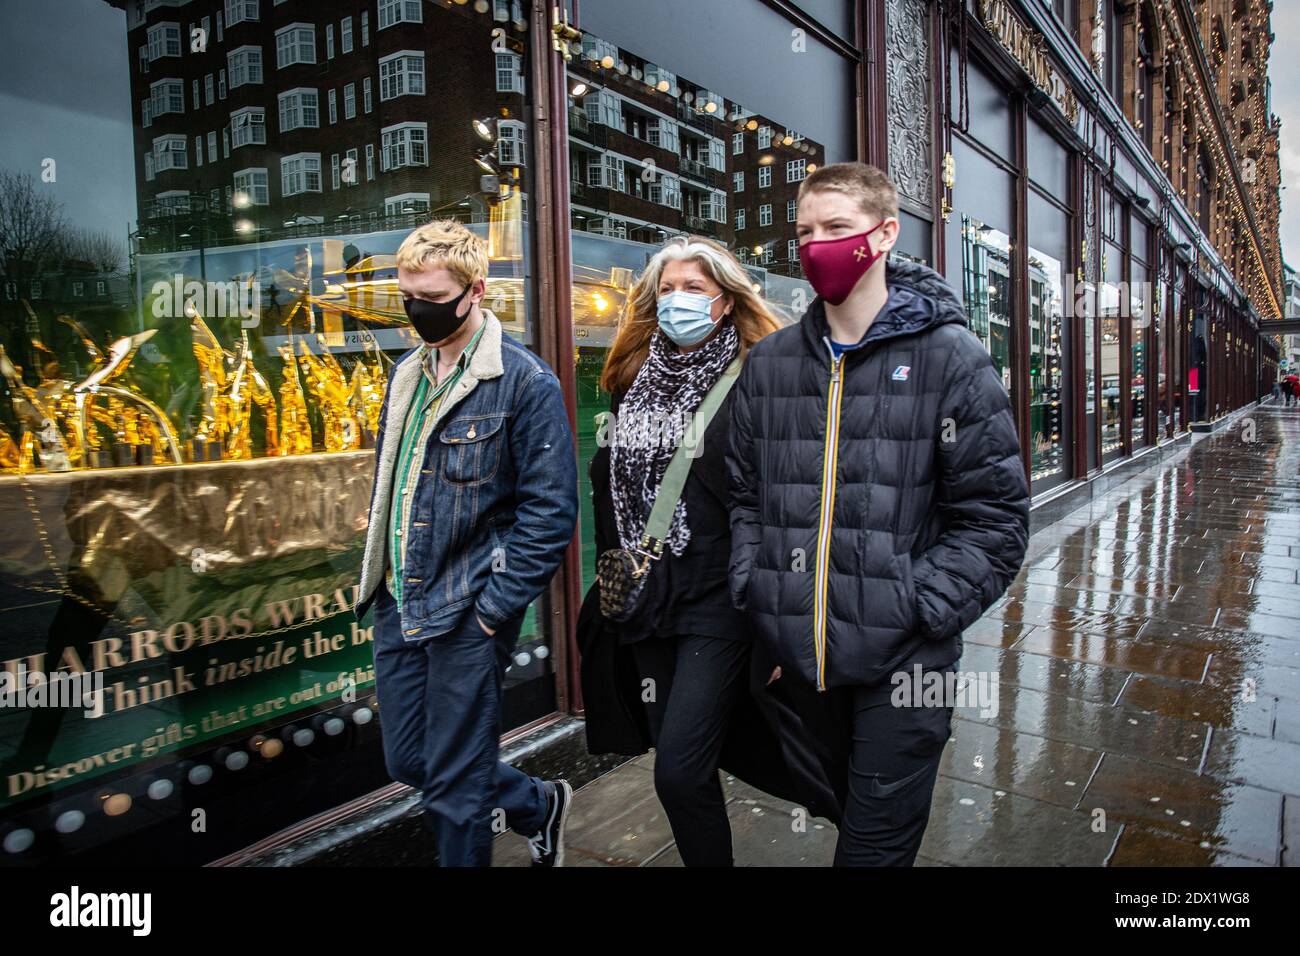 Great Britain / England / London / A family wearing face masks as a precautionary measure against the novel coronavirus COVID-19, walks past Harrods . Stock Photo